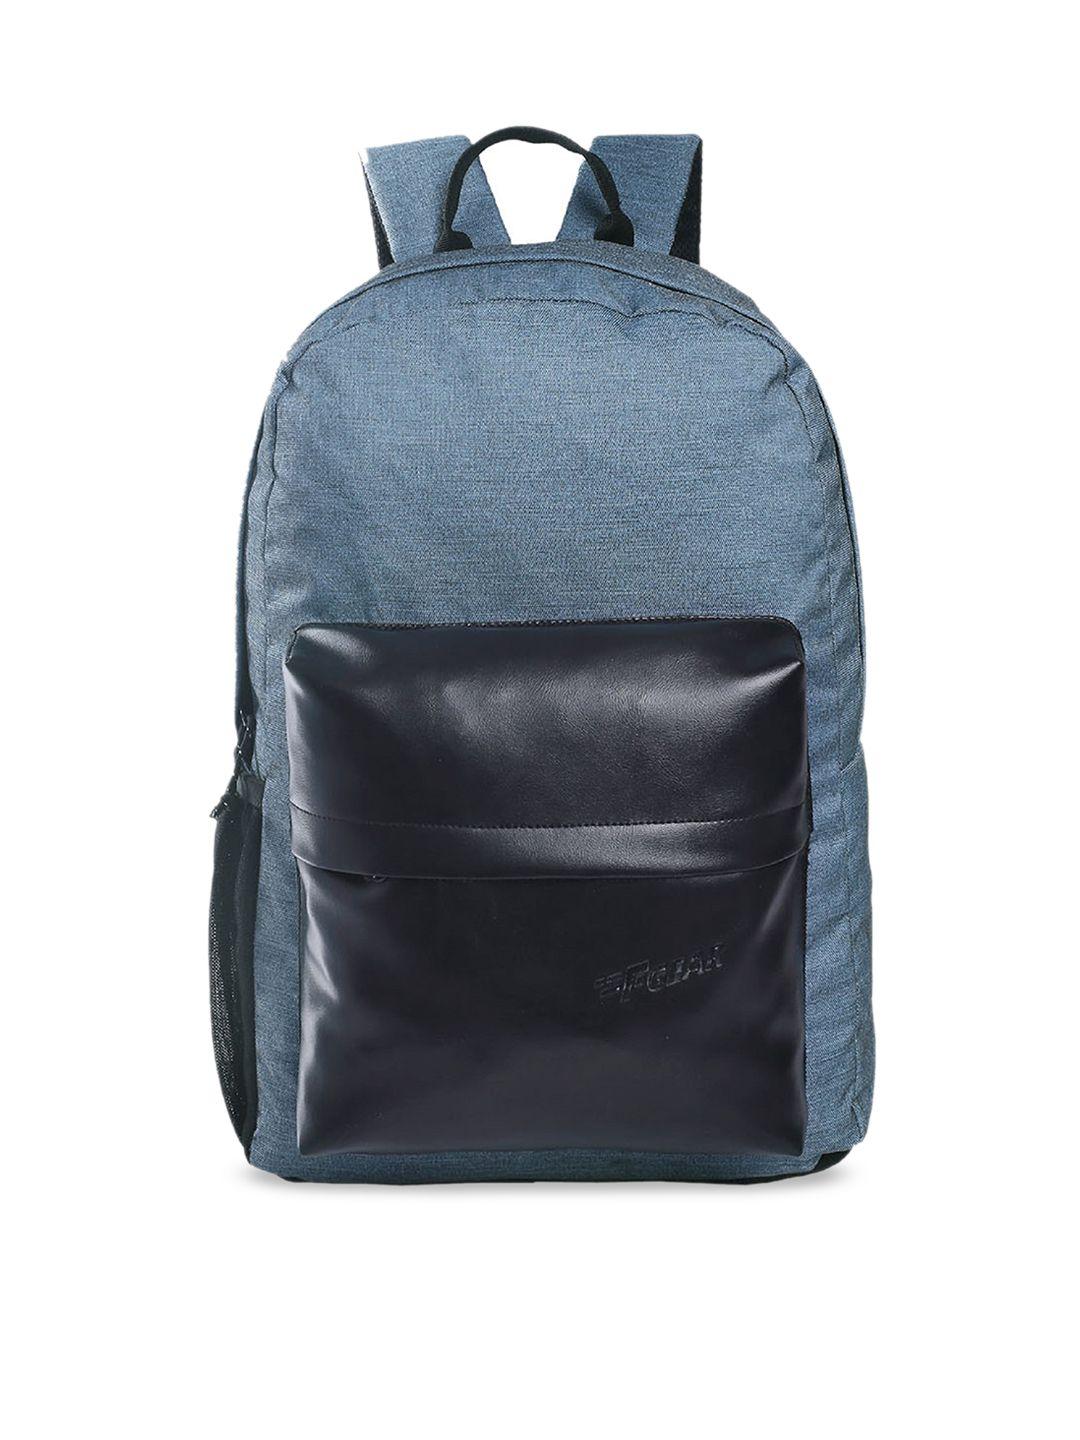 f gear unisex blue & black colourblocked backpack